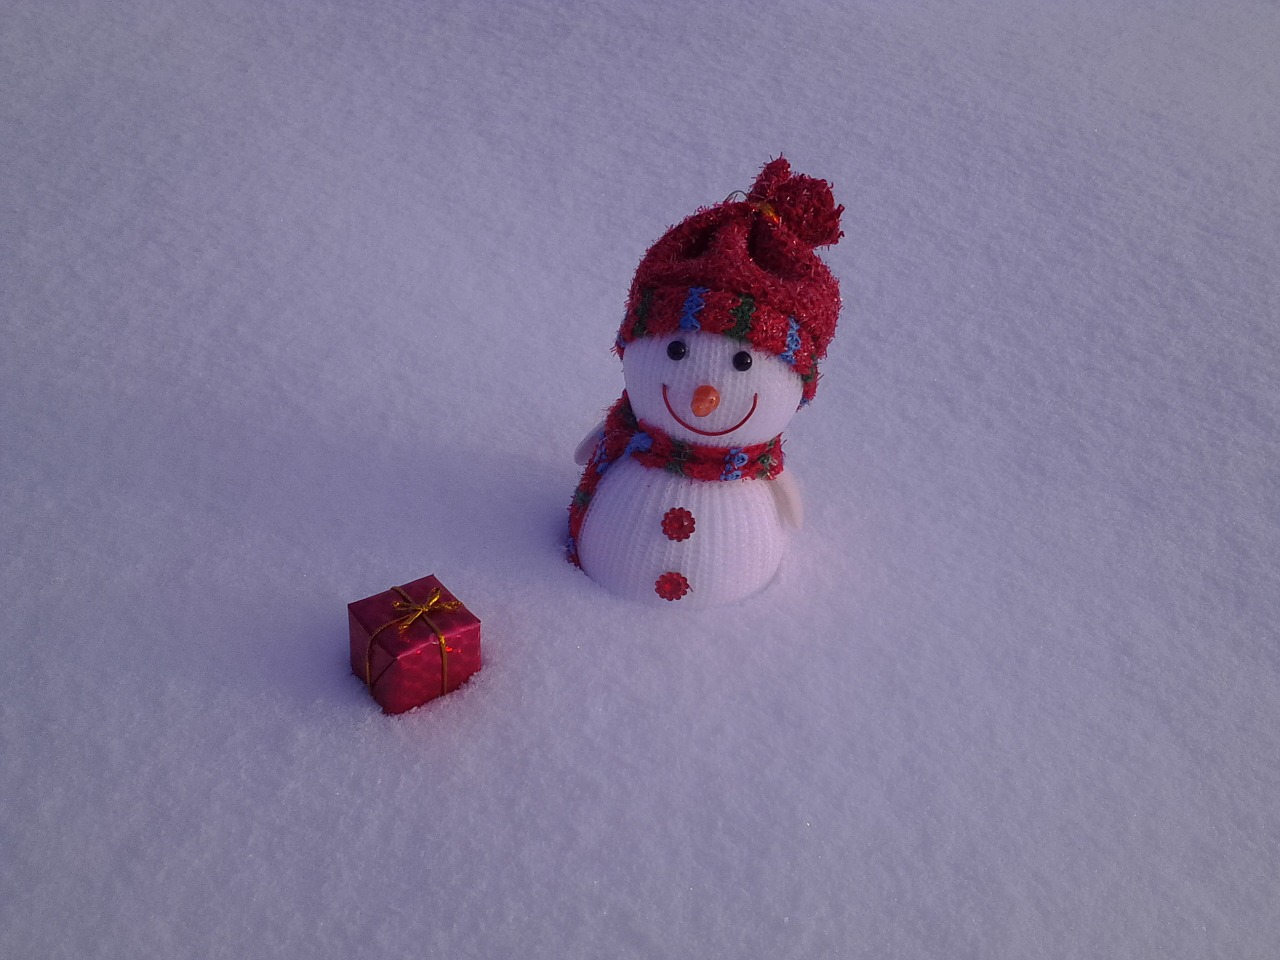 snowman gift red box snow free photo